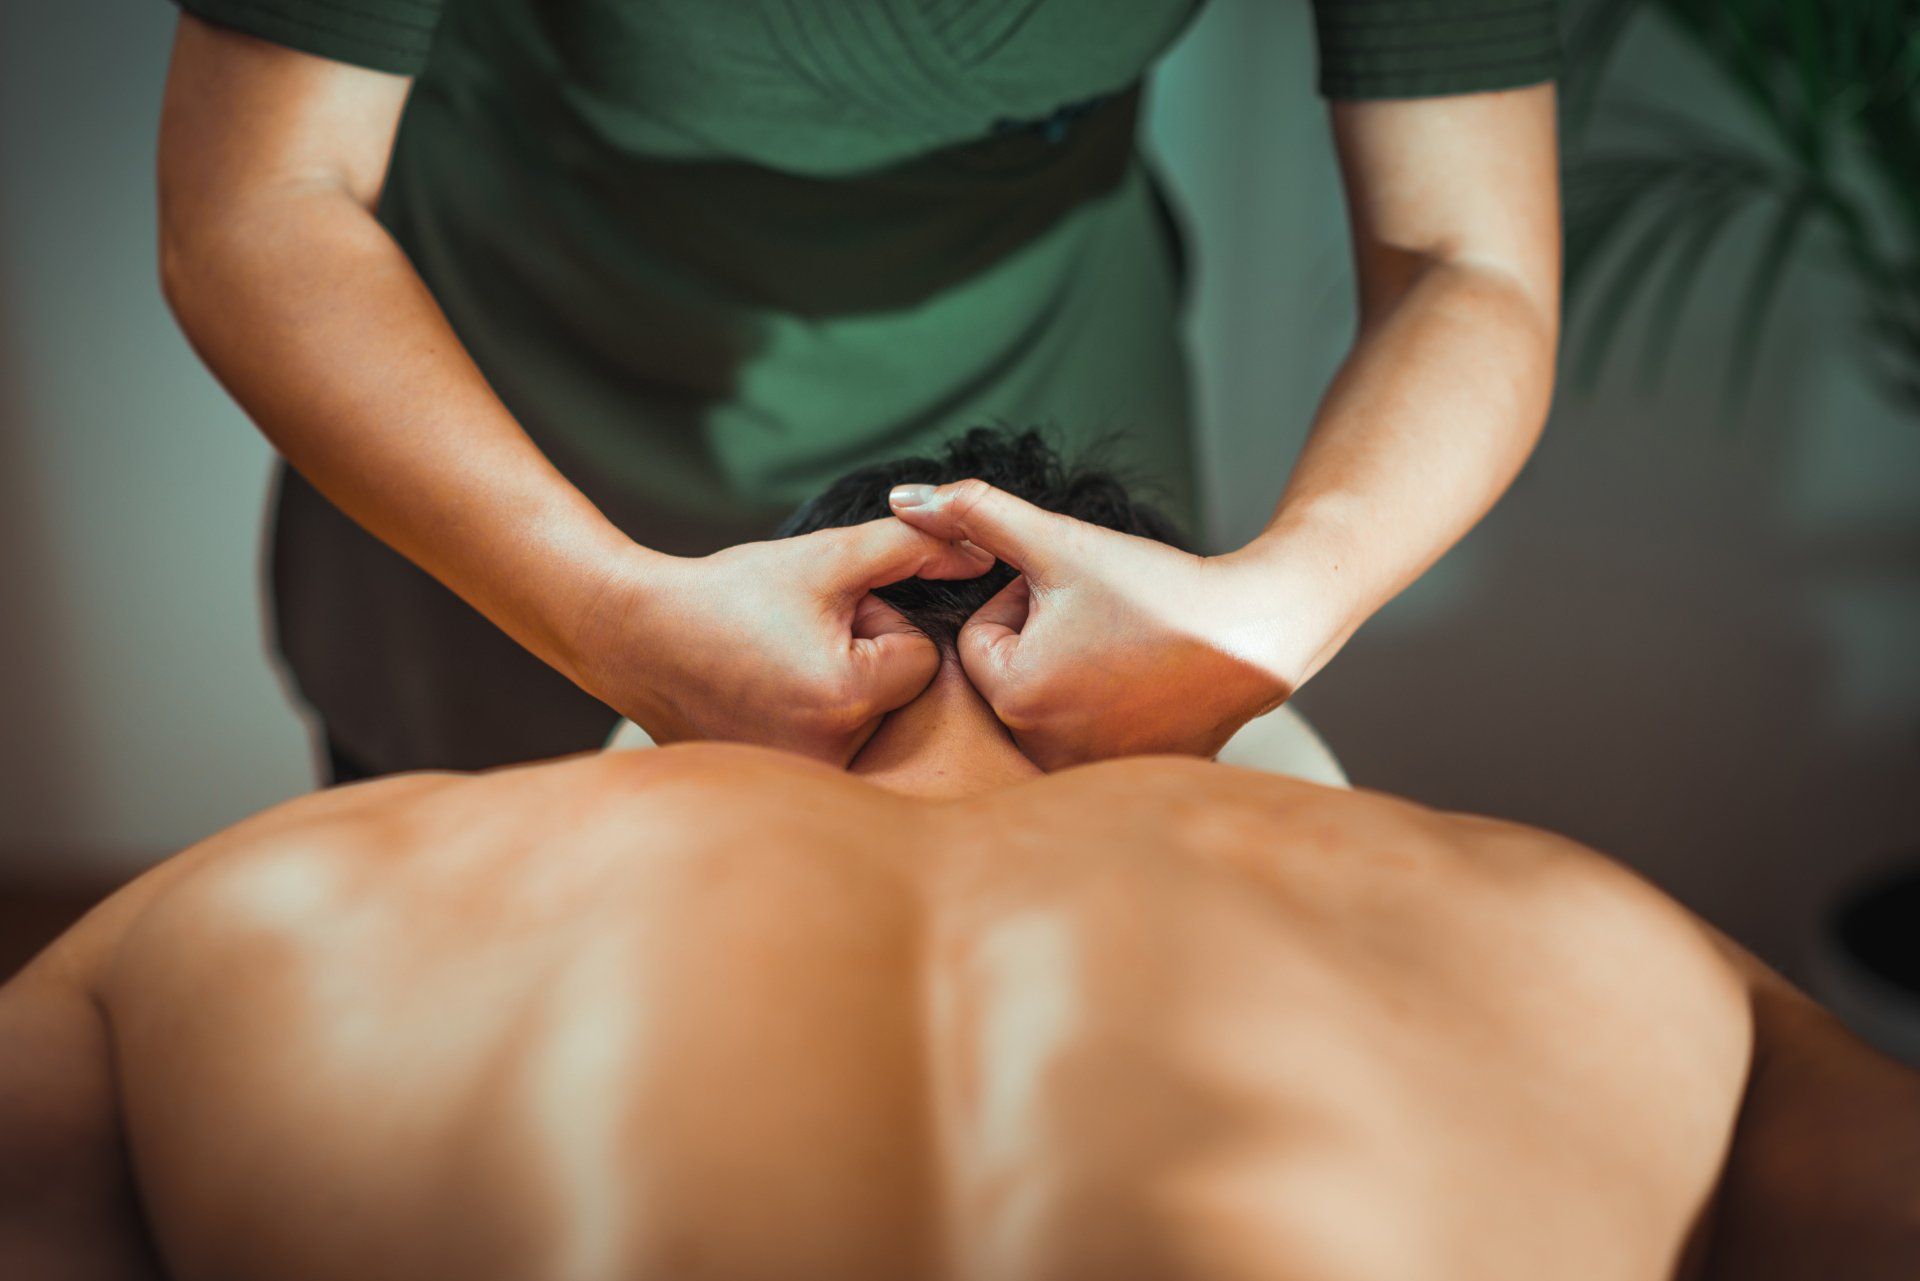 Giving massage